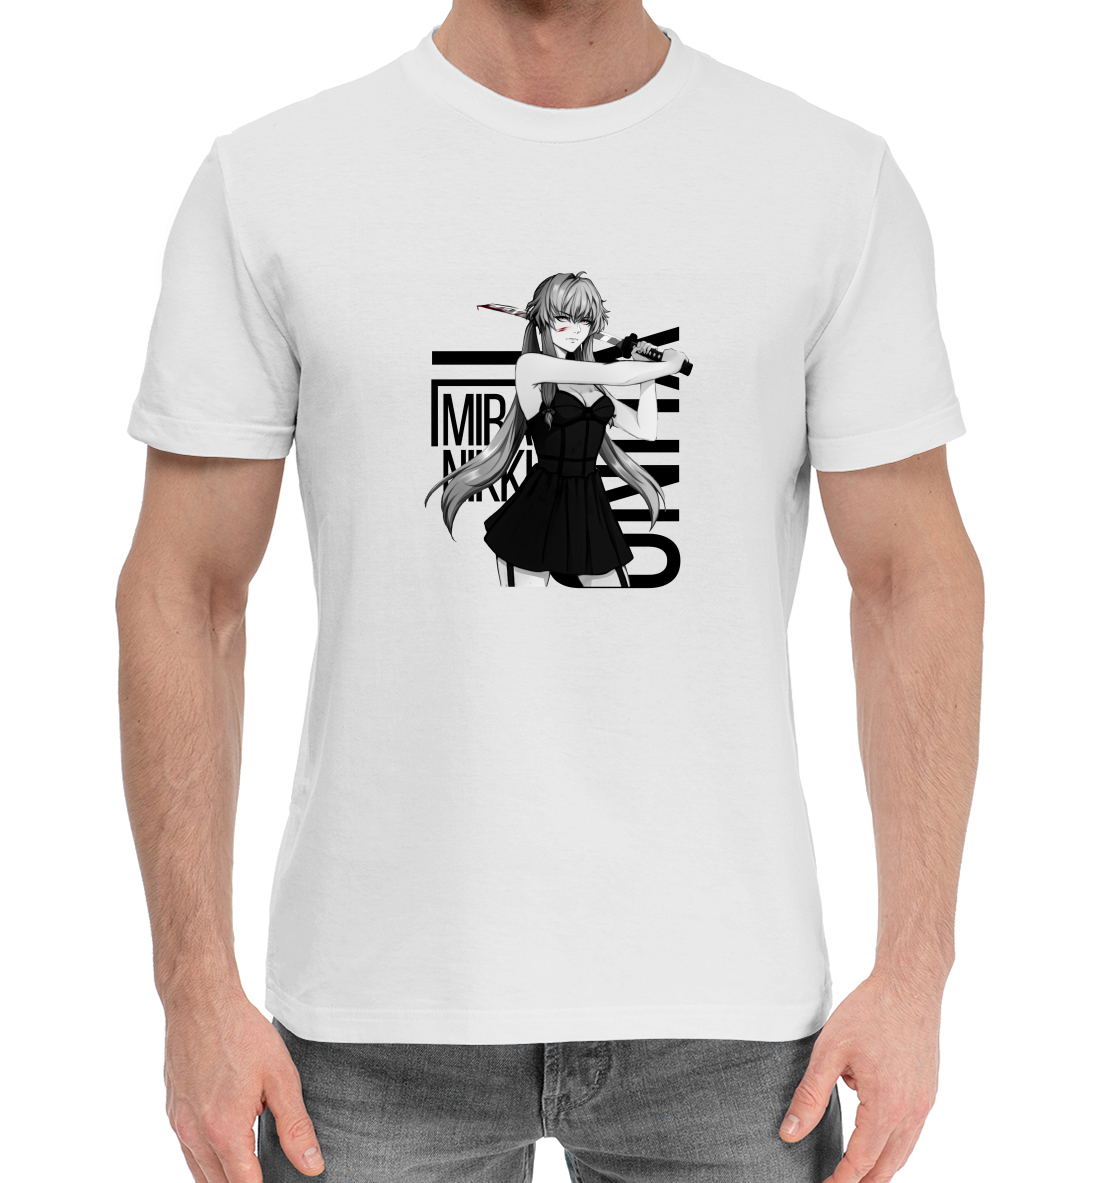 Мужская Хлопковая футболка с принтом Юно Гасай, артикул ANR-644922-hfu-2mp